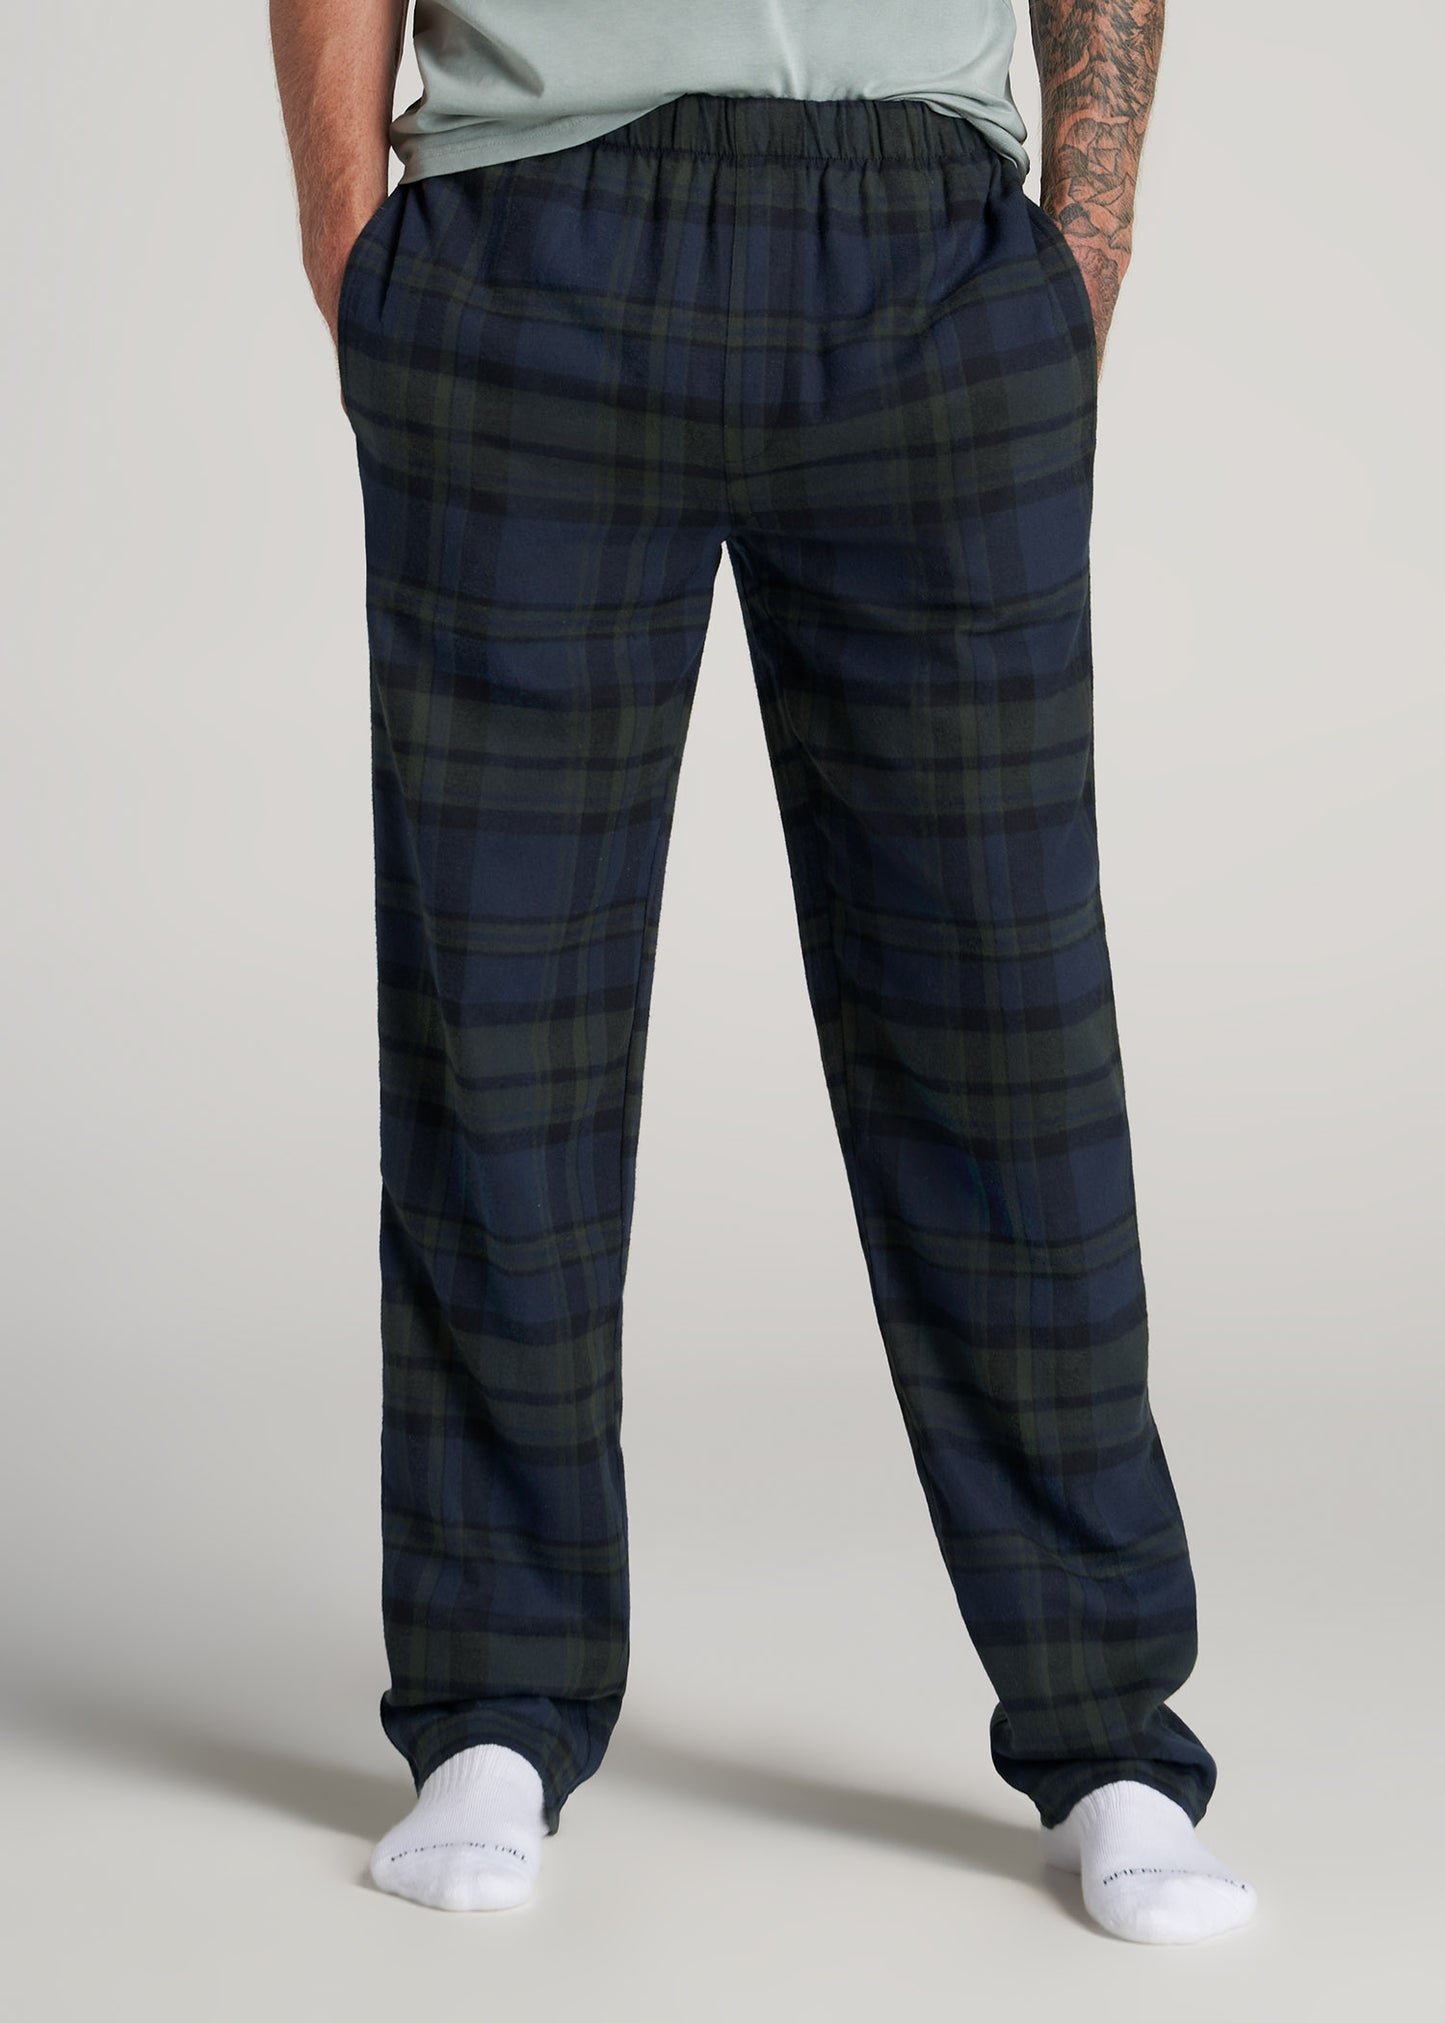 Regular Fit Flannel Pajama Pants - Blue/red plaid - Men